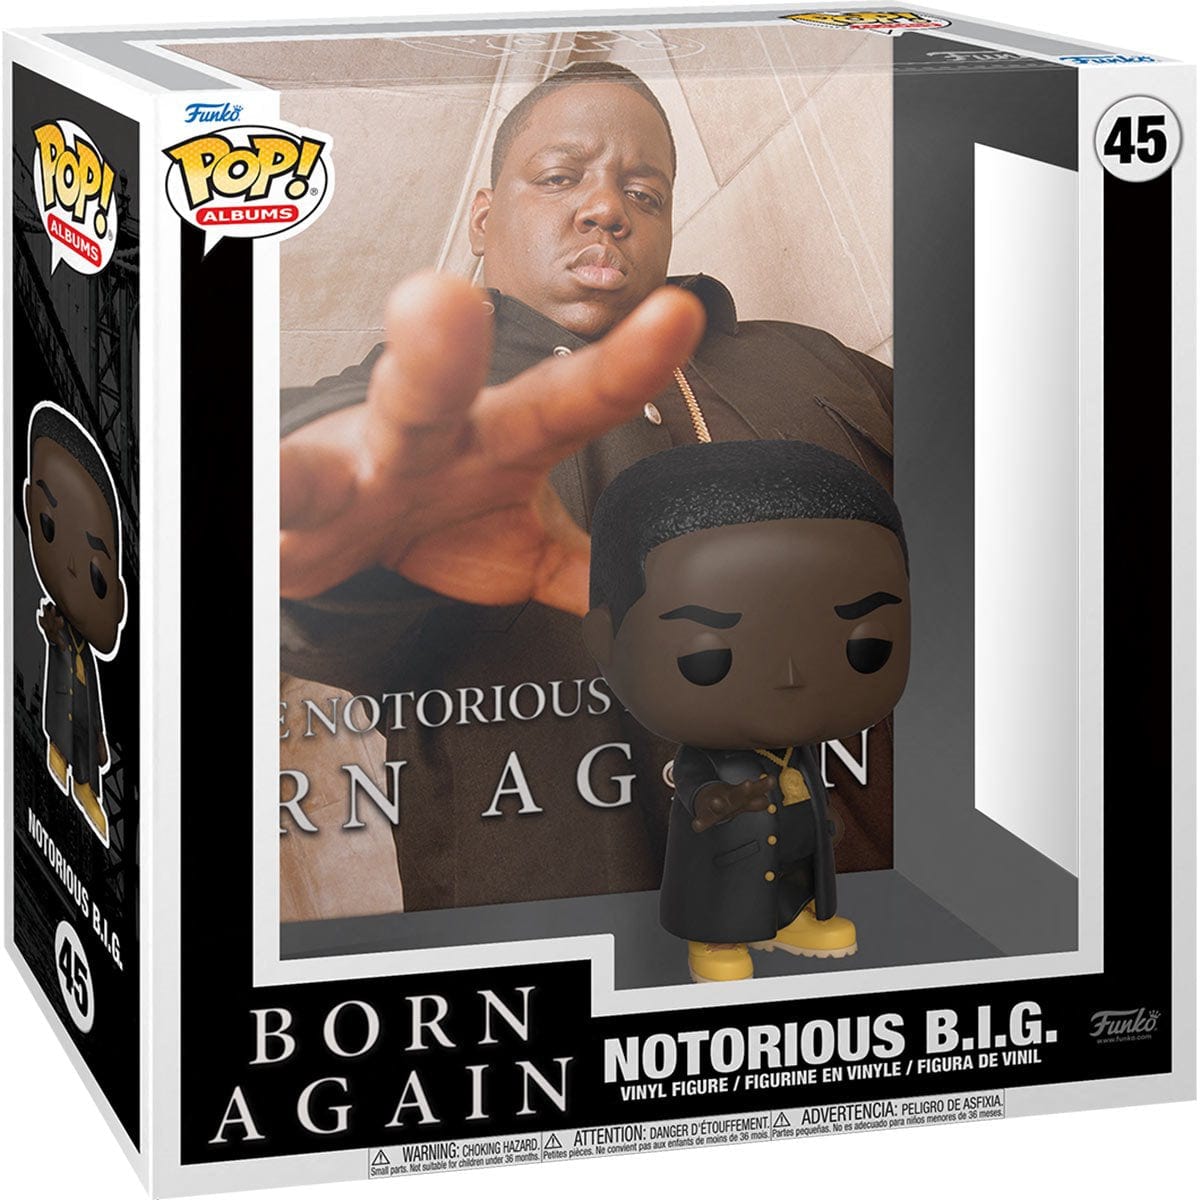 Notorious B.I.G. Born Again Pop! Album Figure with Case..